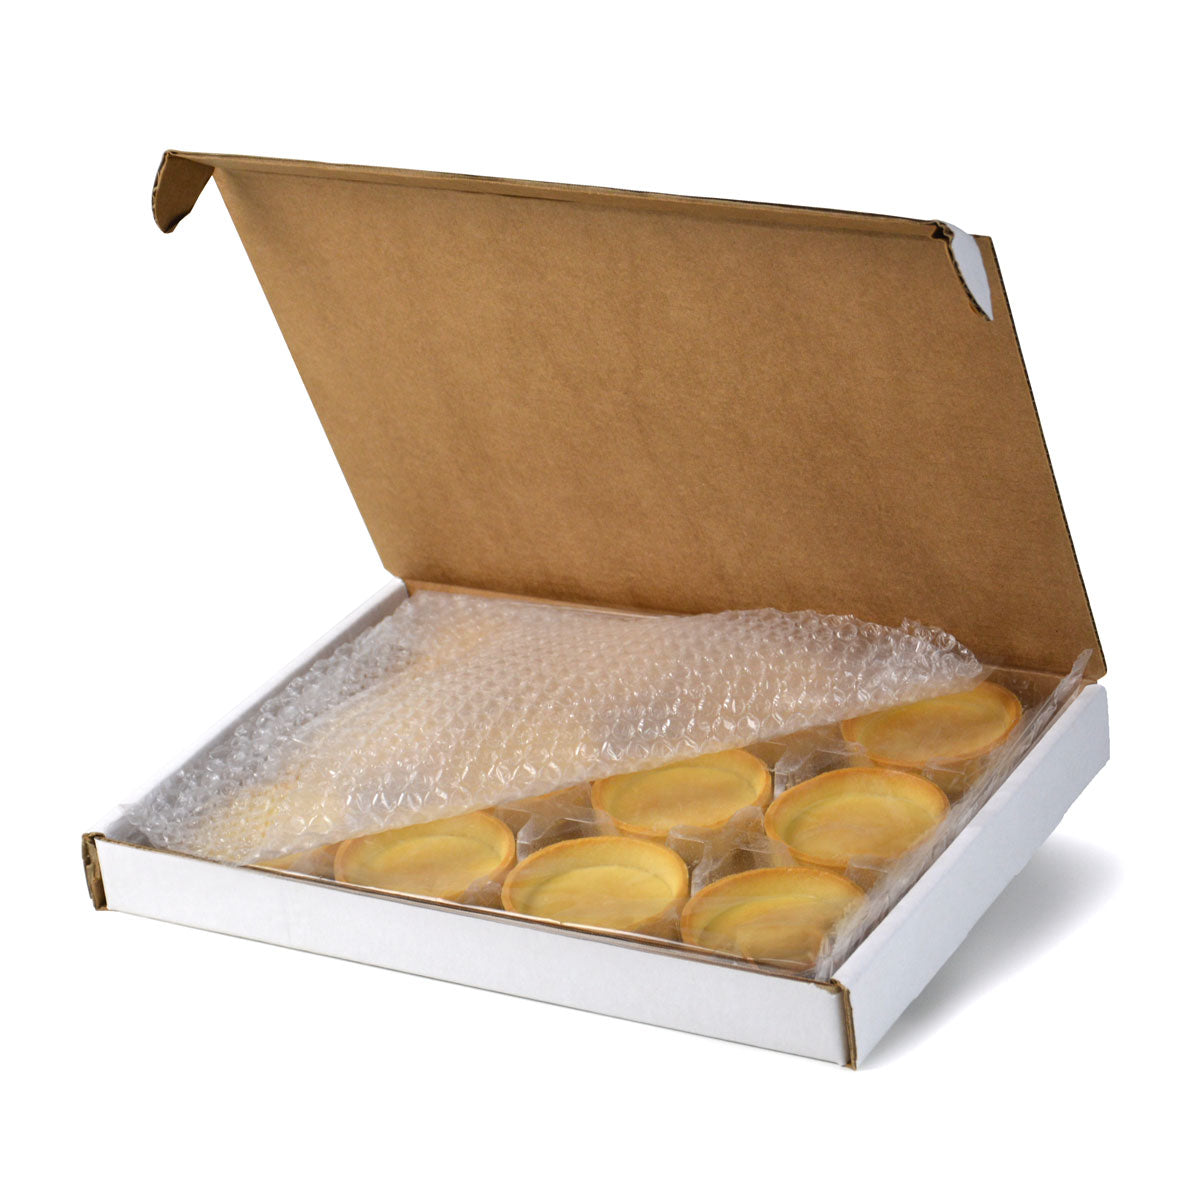 Medium round sweet tart inside box 12 pieces